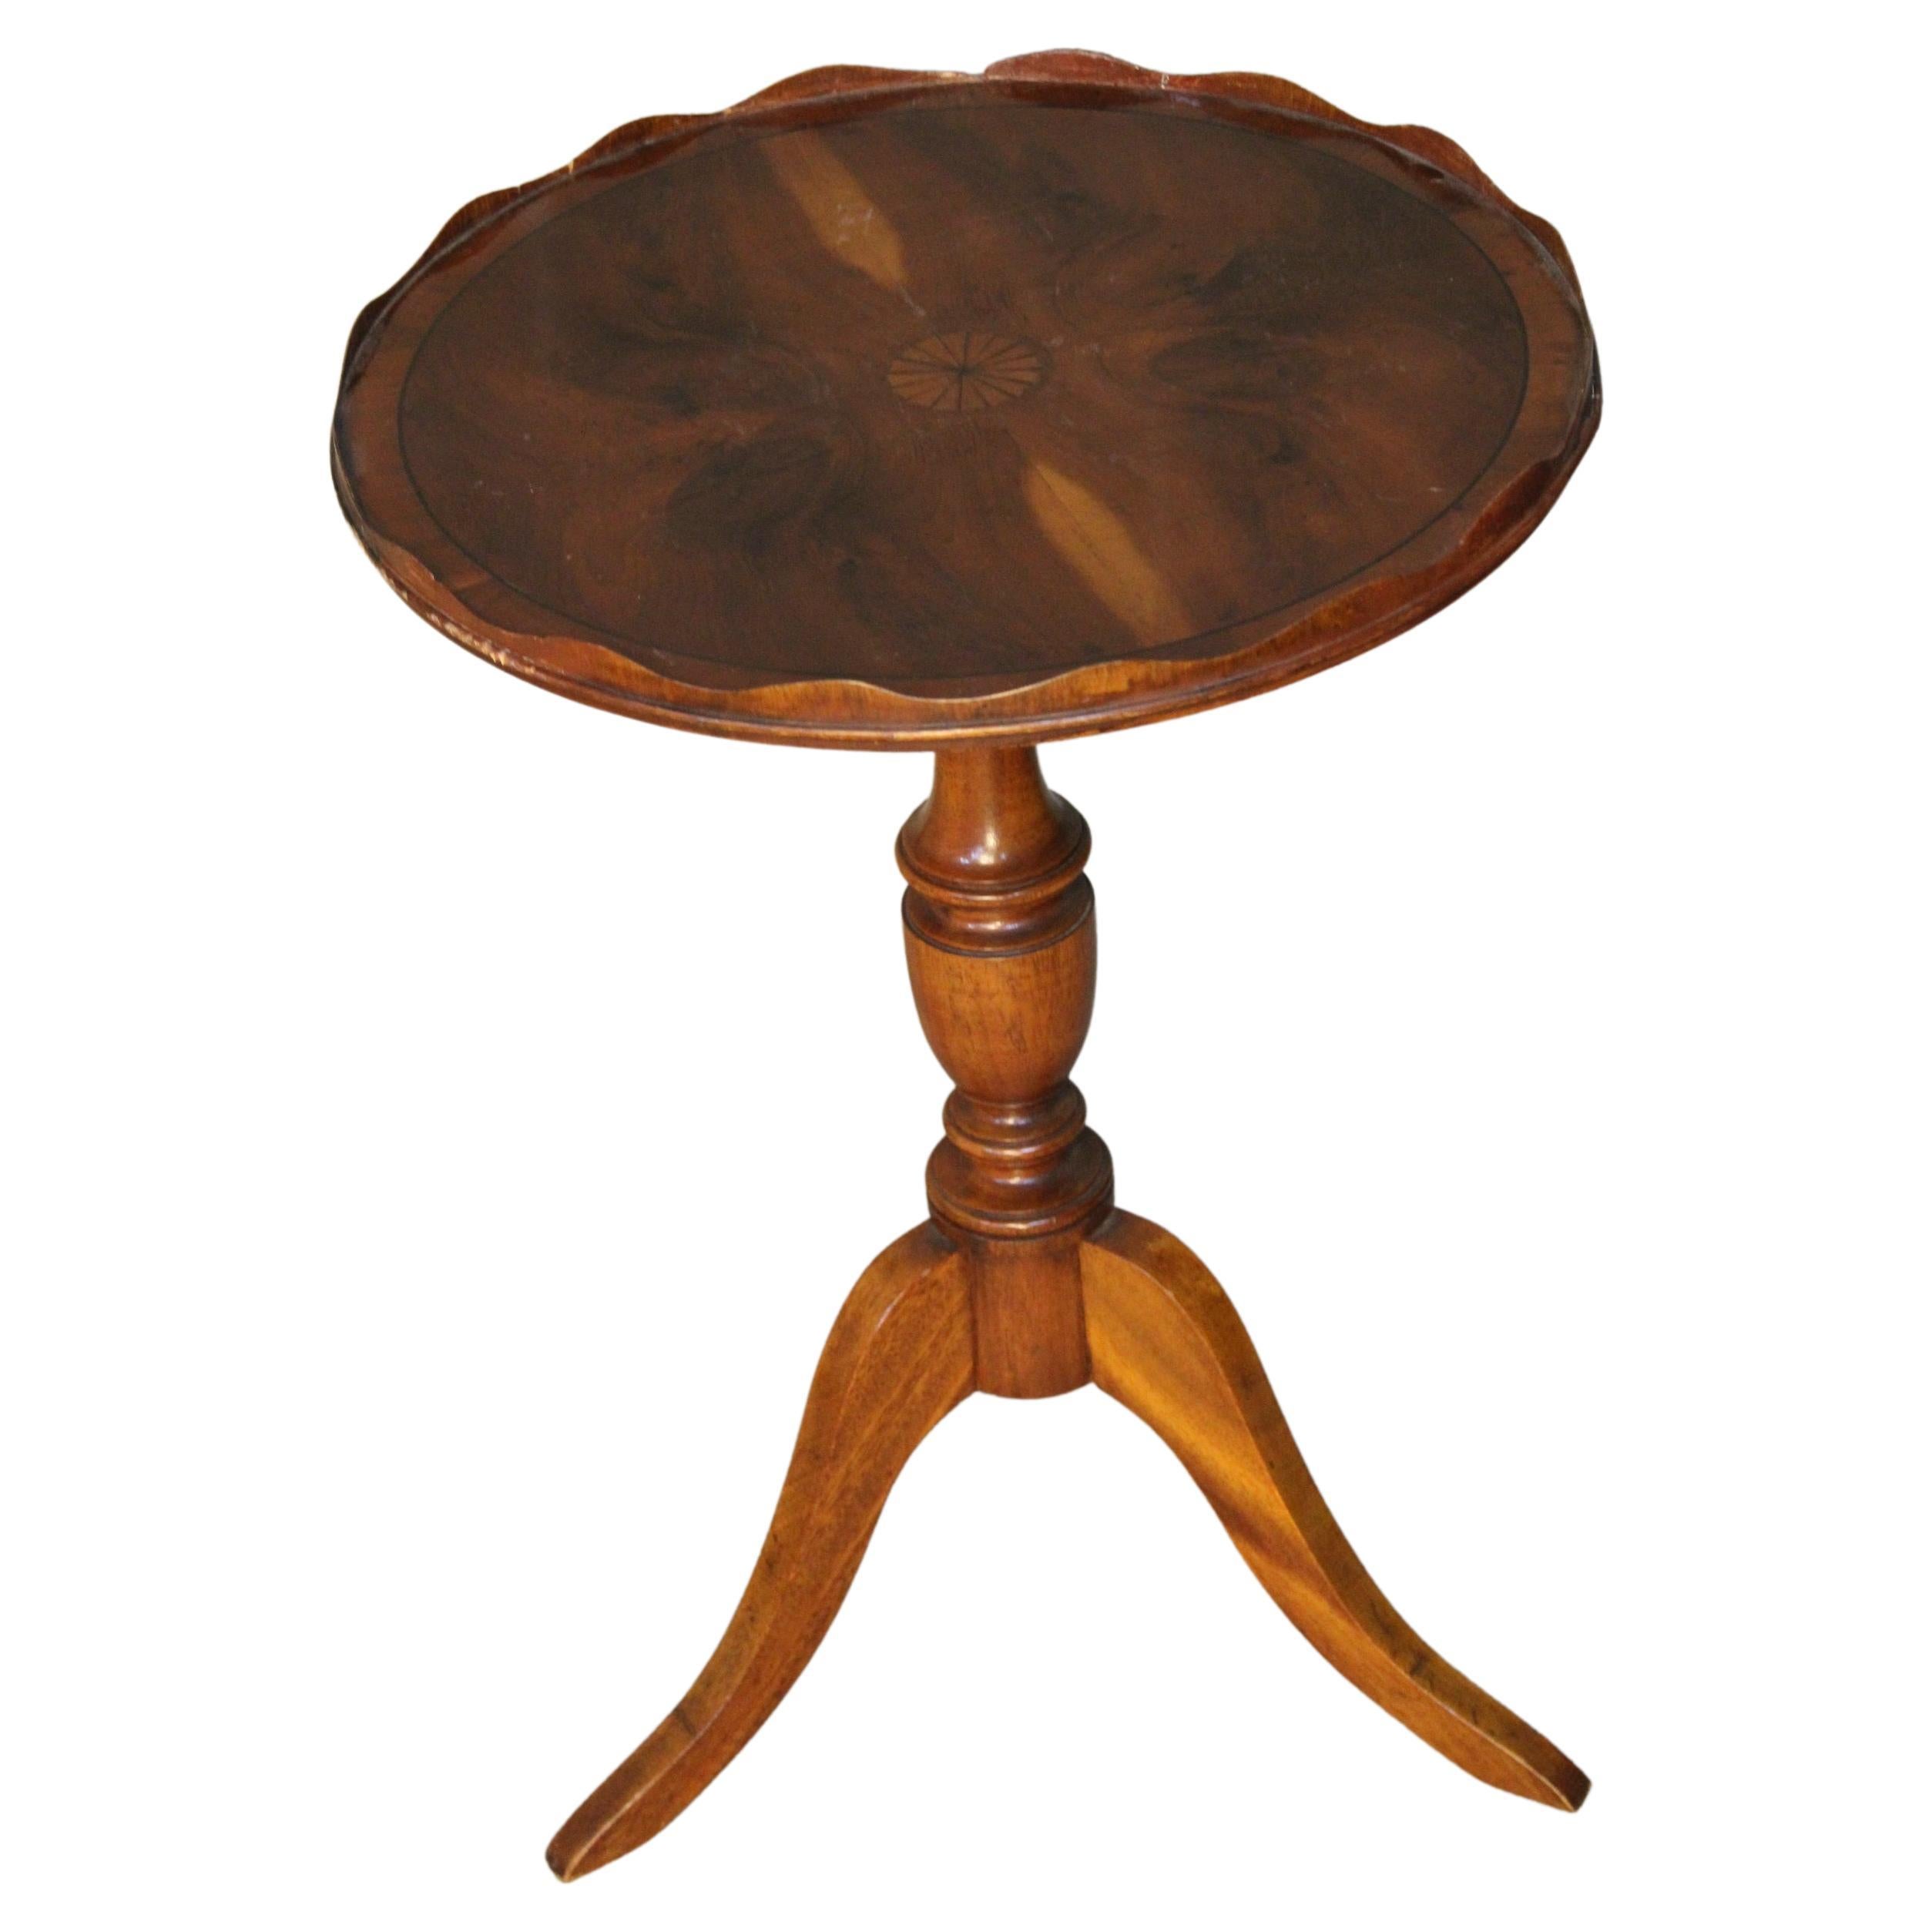 Sheraton Revival Hardwood Tripod Side Table, 19th century small coffee table